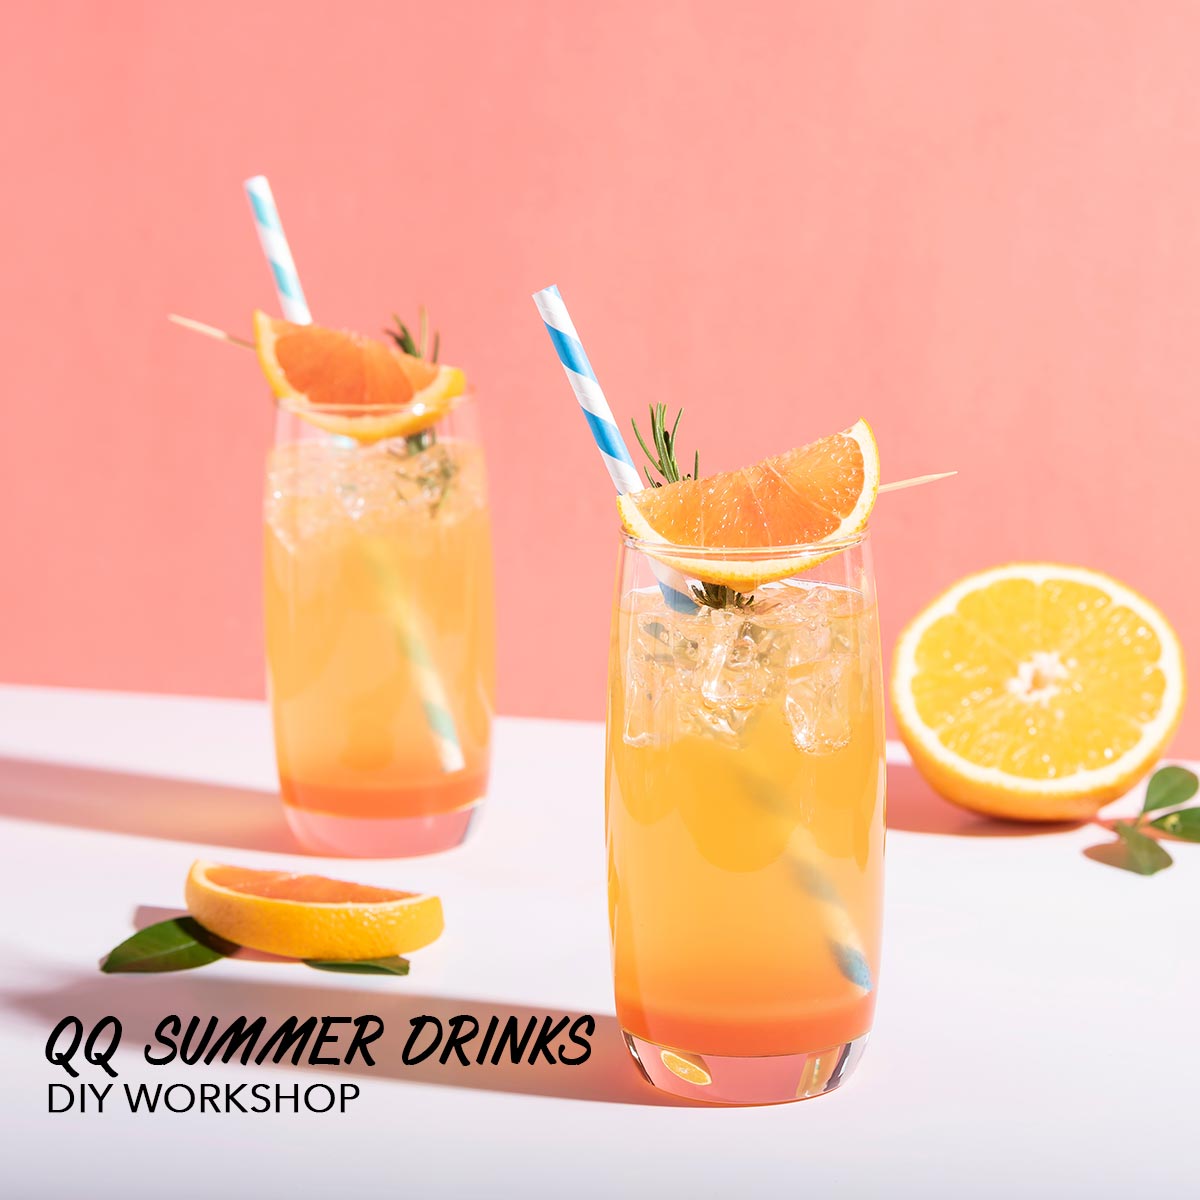 自製夏日消暑飲品 QQ Summer Drinks DIY Workshop